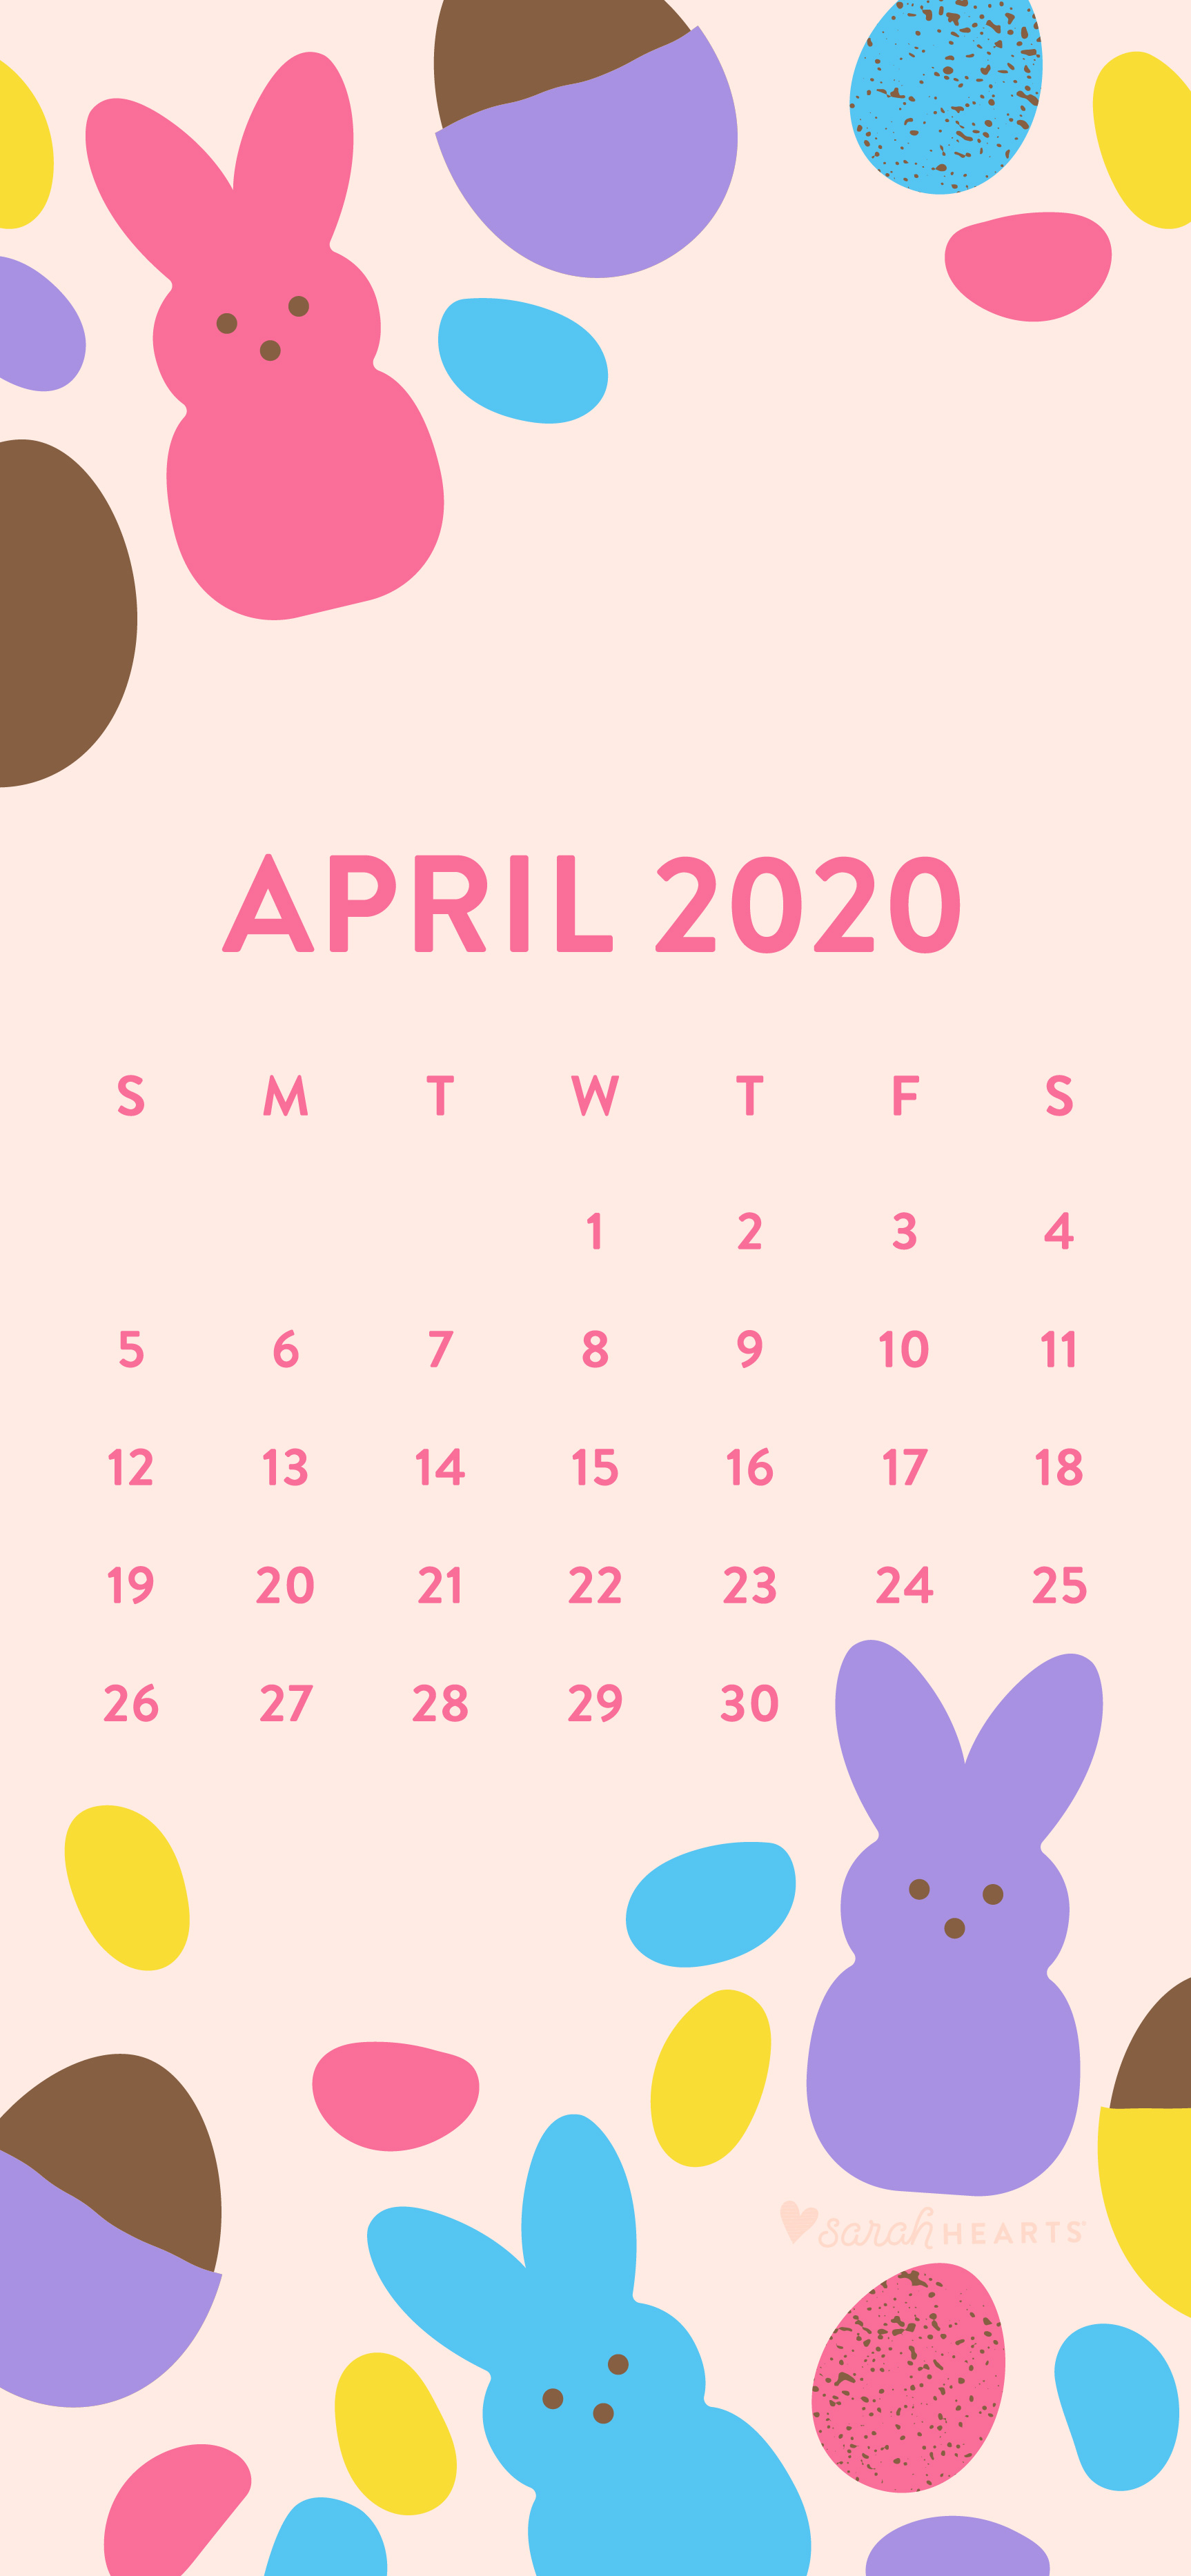 April 2020 Easter Candy Calendar Wallpaper - Sarah Hearts